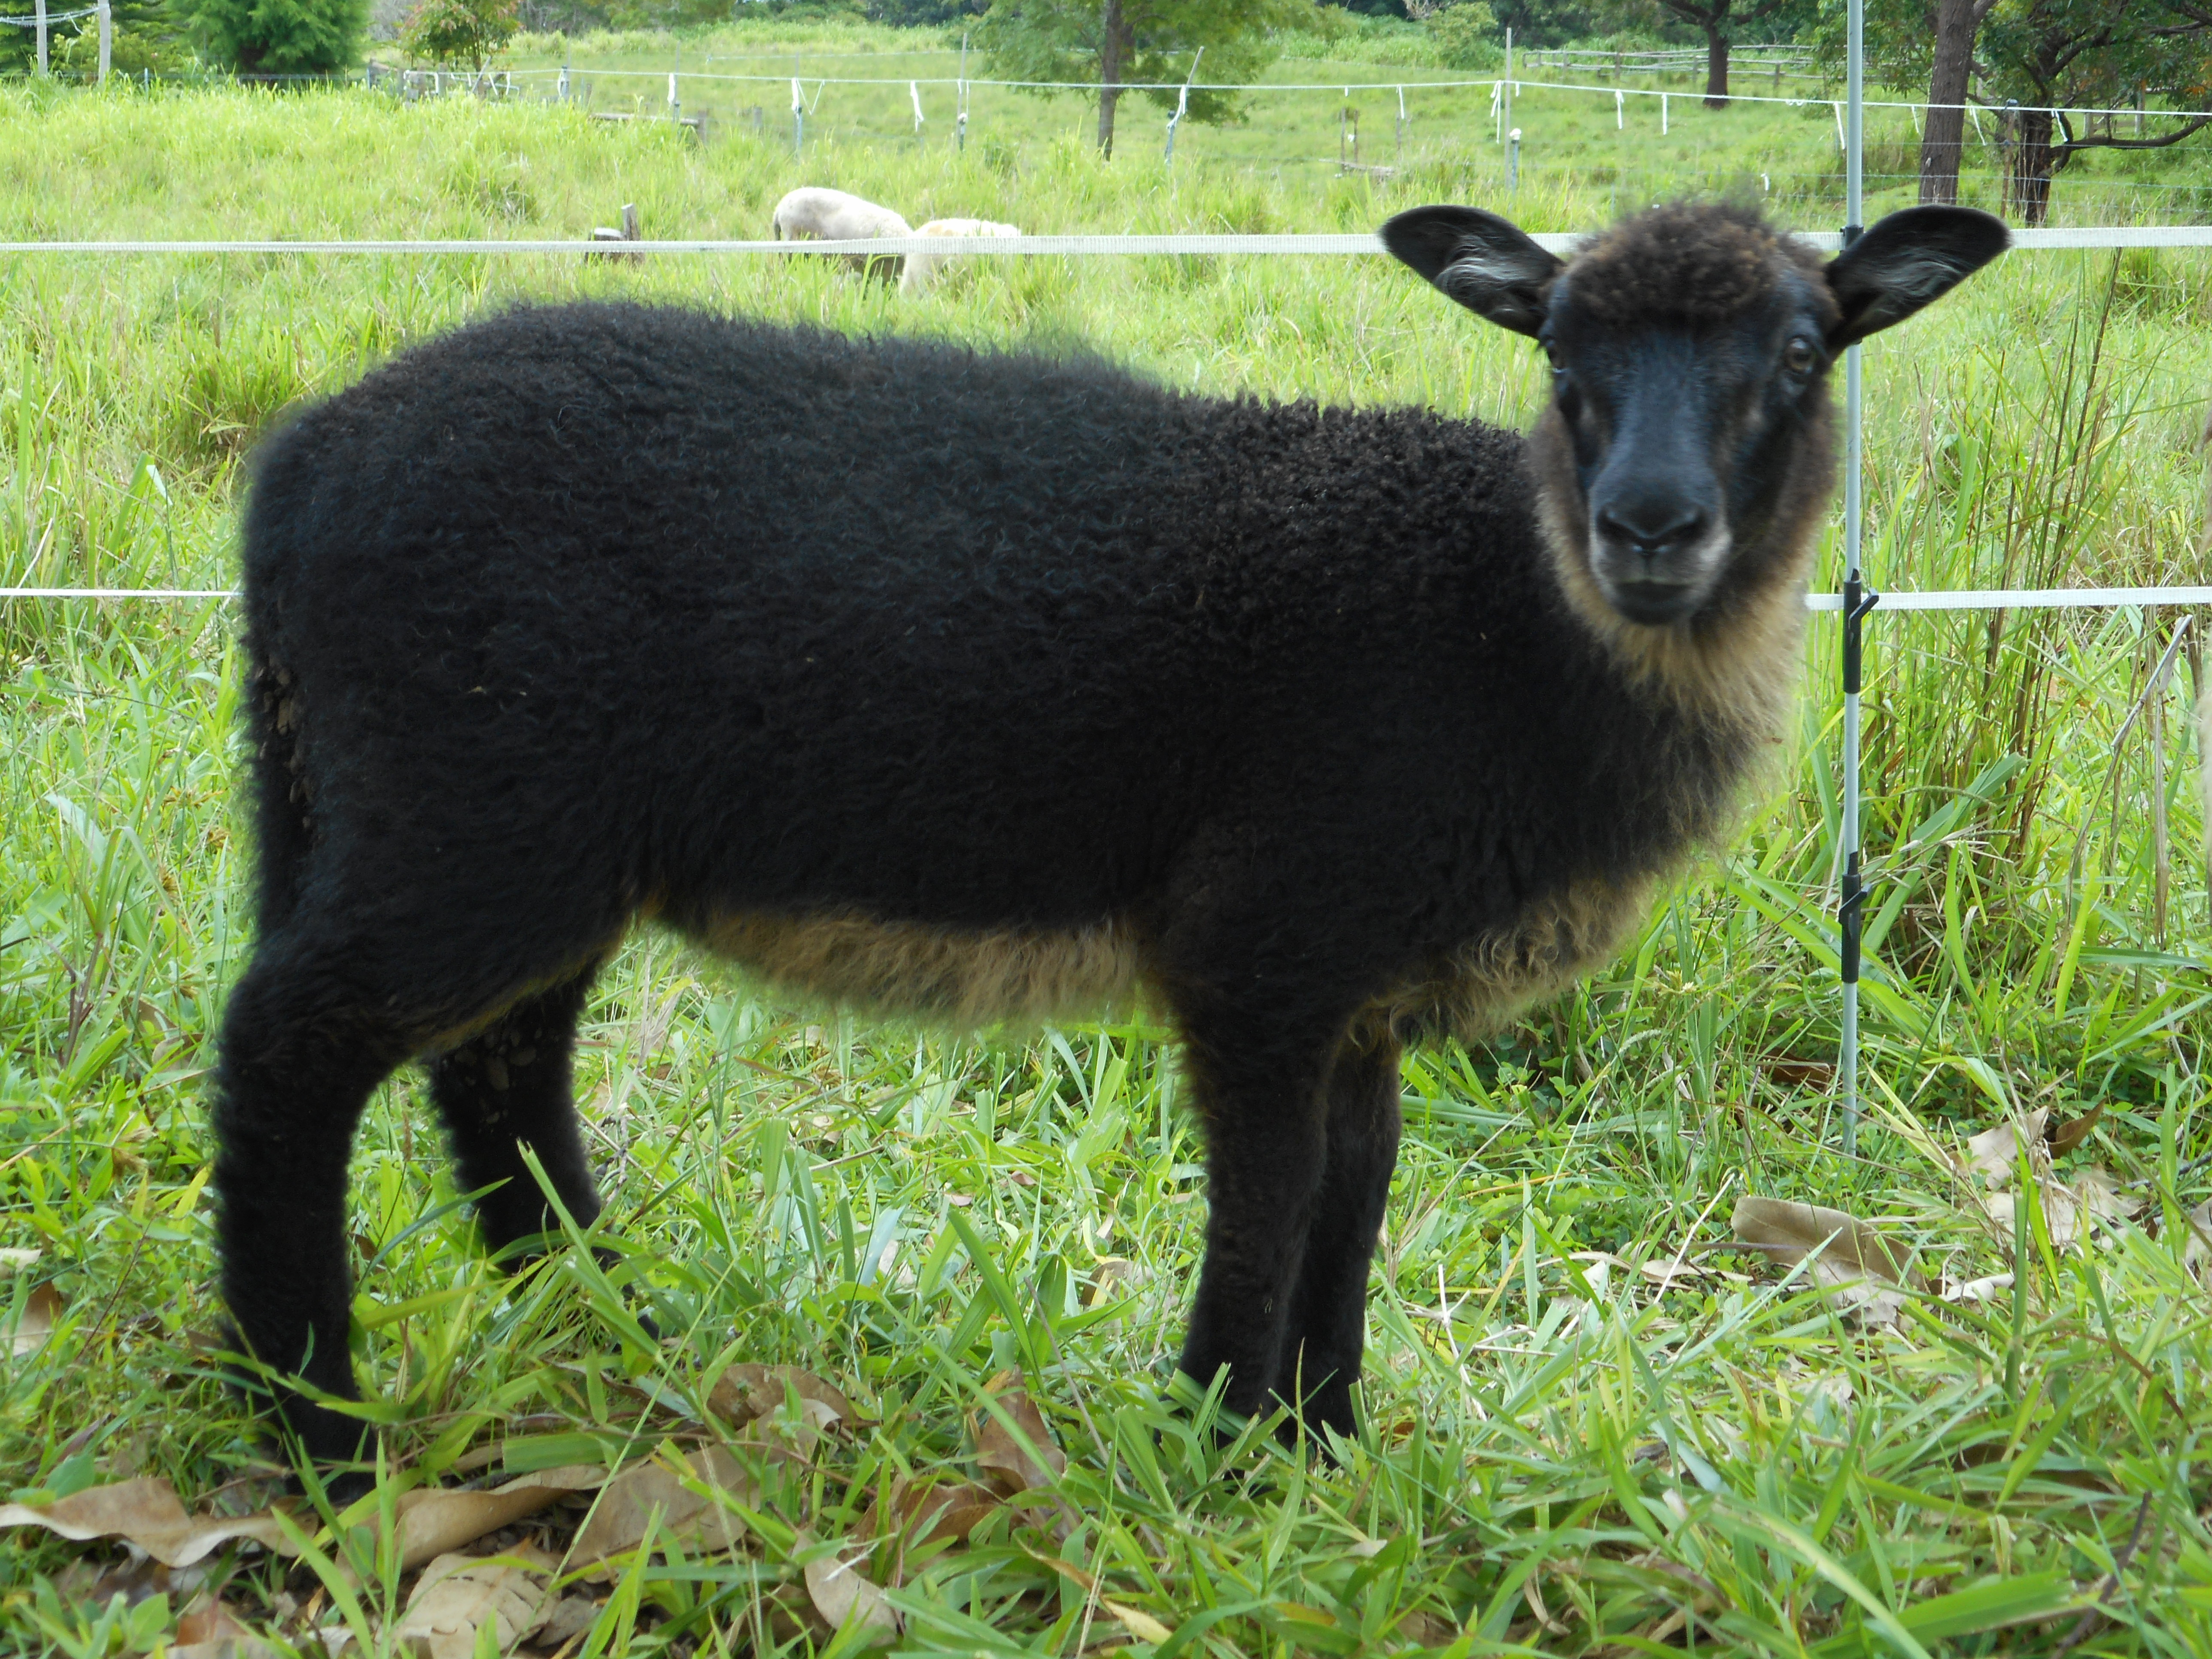 Black and tan ram lamb